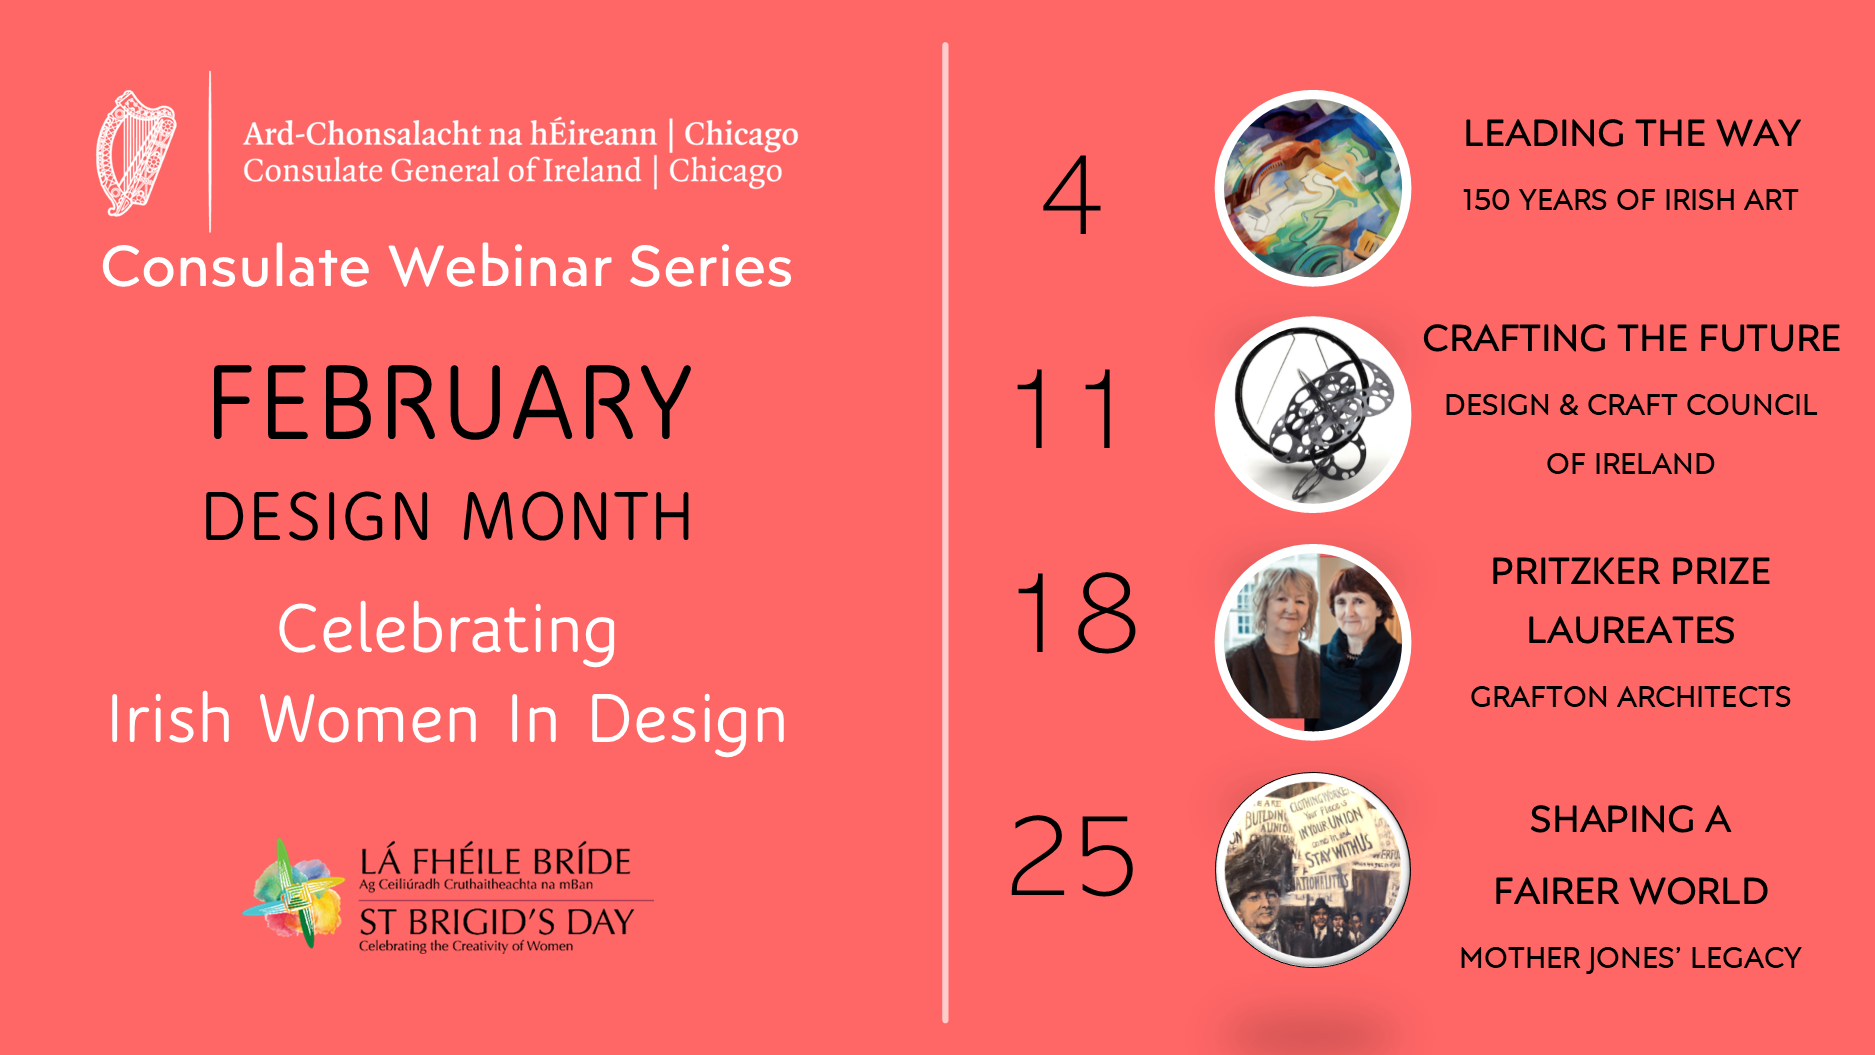 February Design Month-Consulate Webinar Series Celebrating Irish Women in Design. View events here.